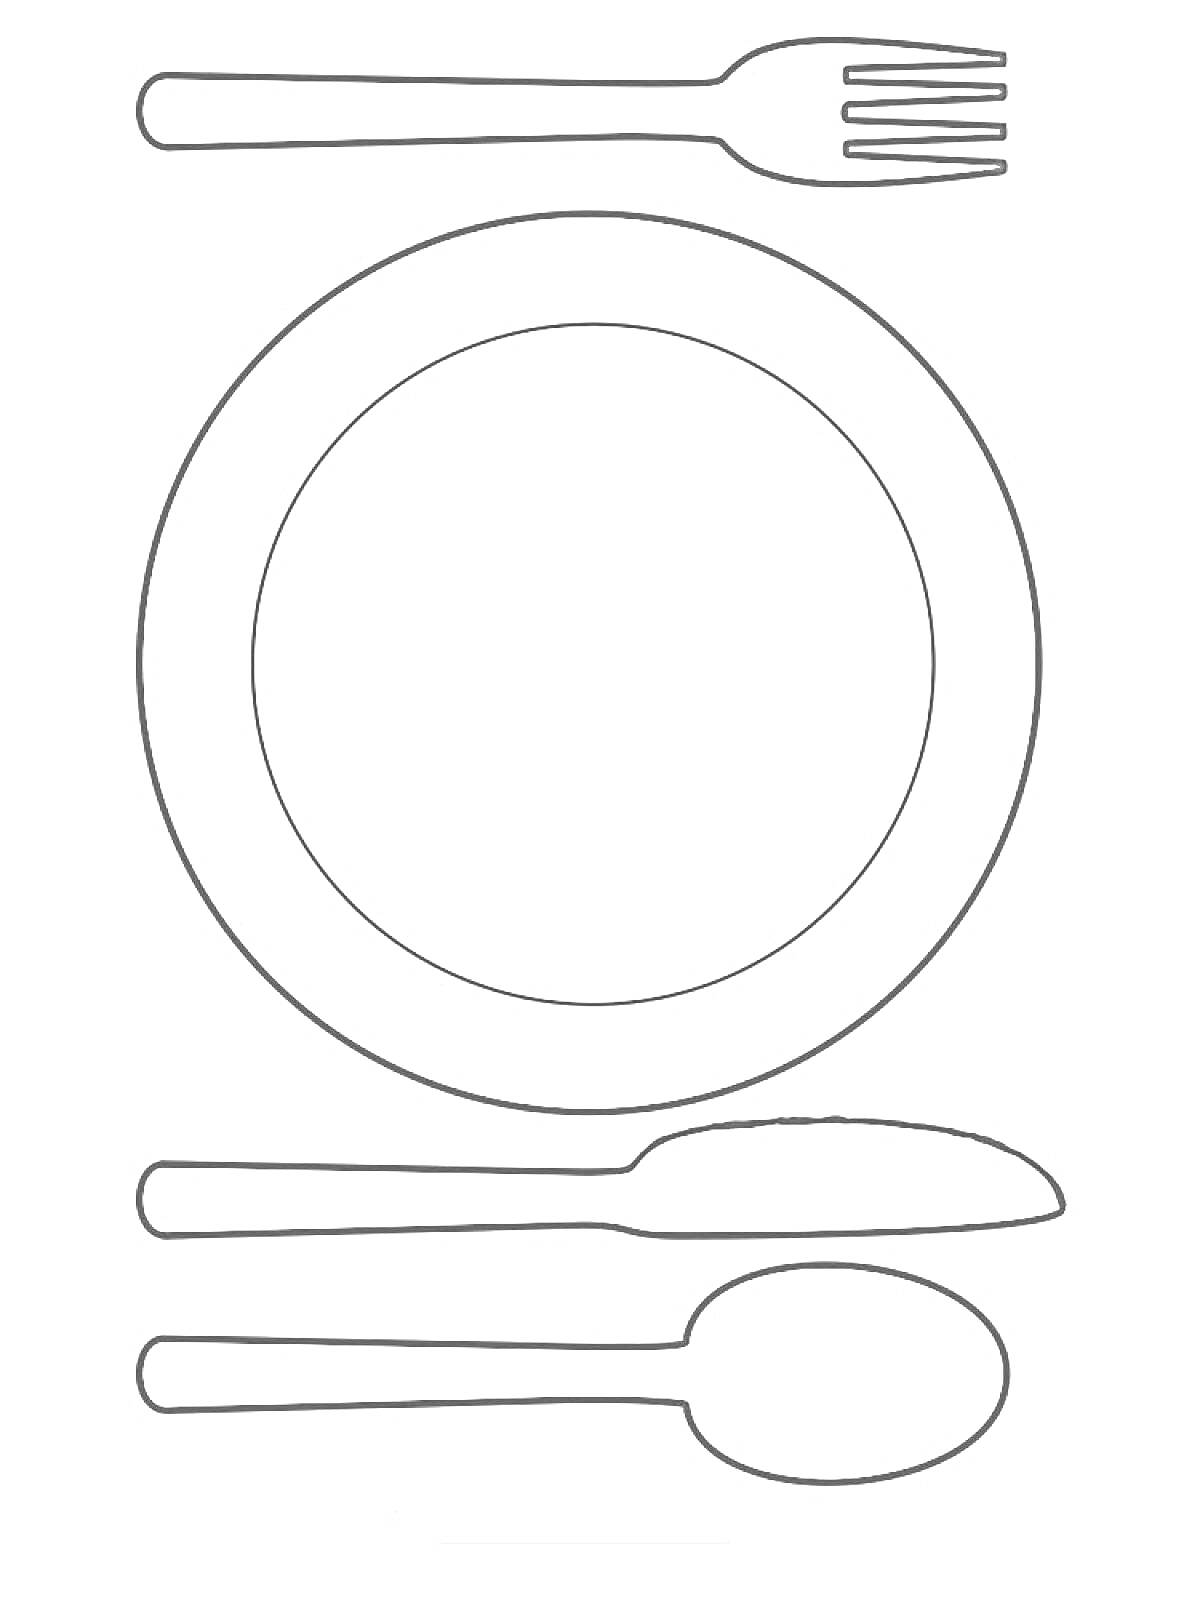 На раскраске изображено: Тарелка, Вилка, Нож, Ложка, Посуда, Кухонные принадлежности